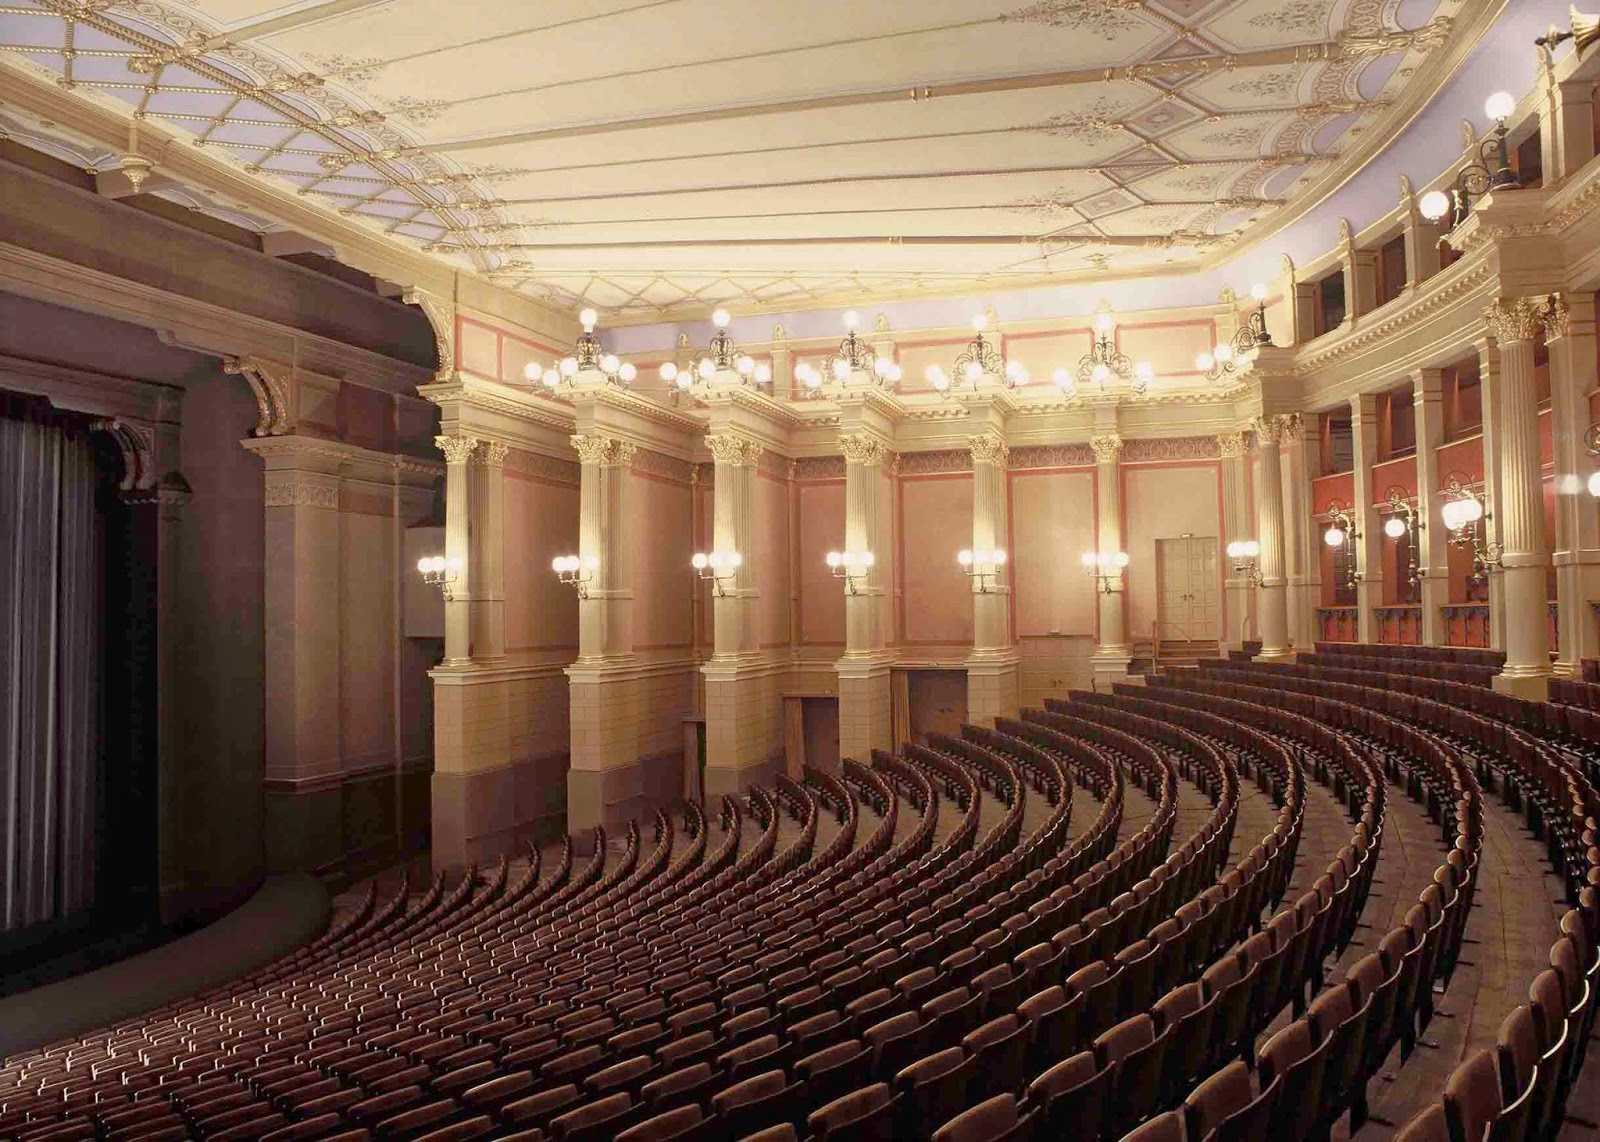 The Bayreuth Festspielhaus auditorium